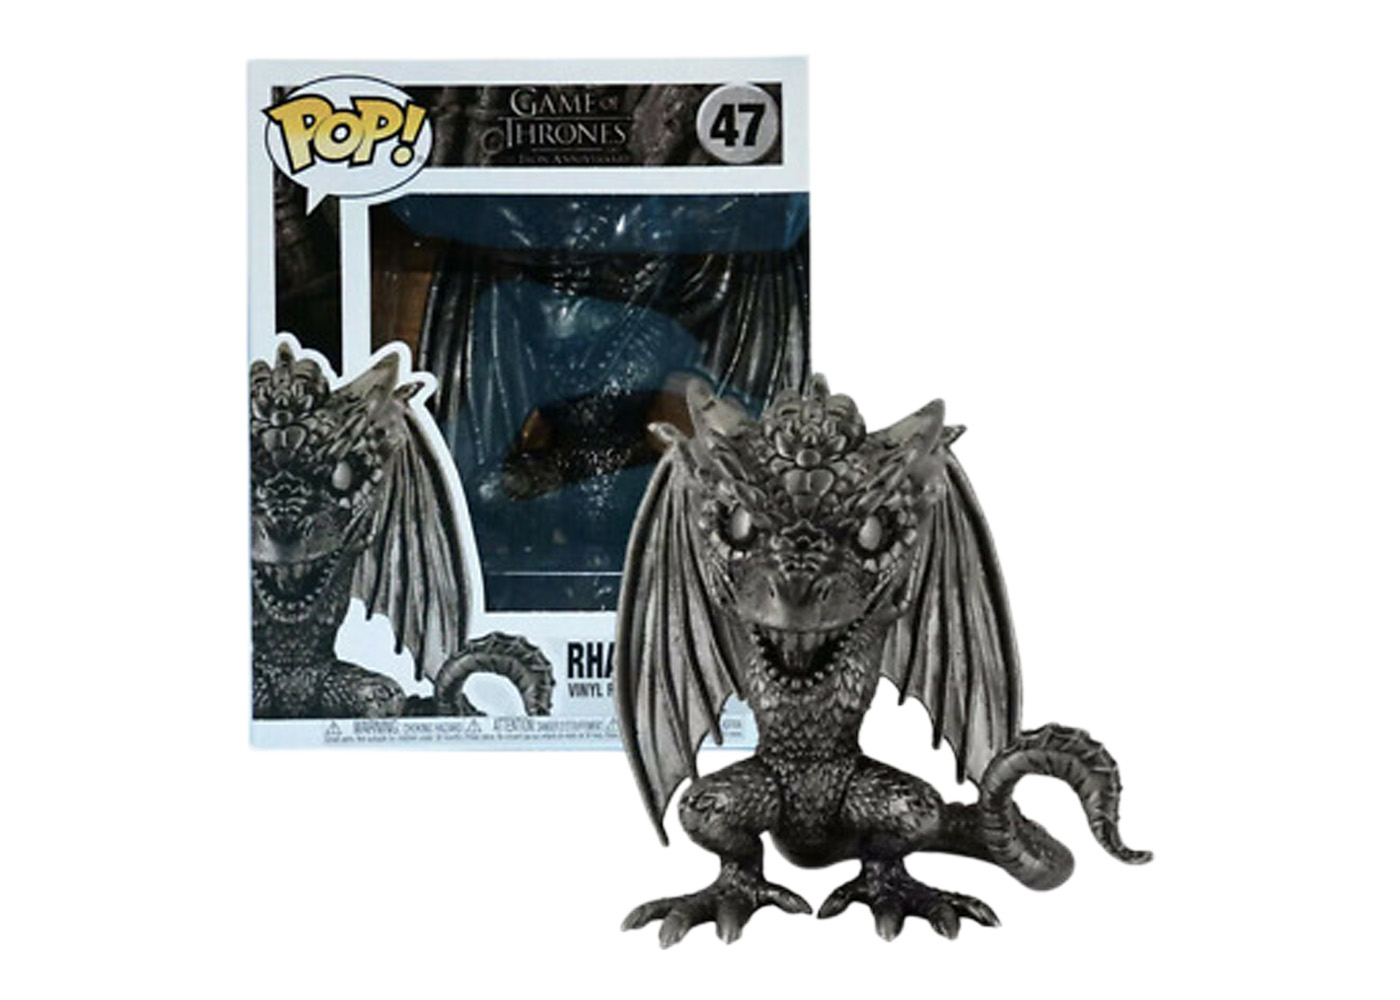 Vinyl Figure Game of Thrones Rhaegal Dragon 6-Inch Pop